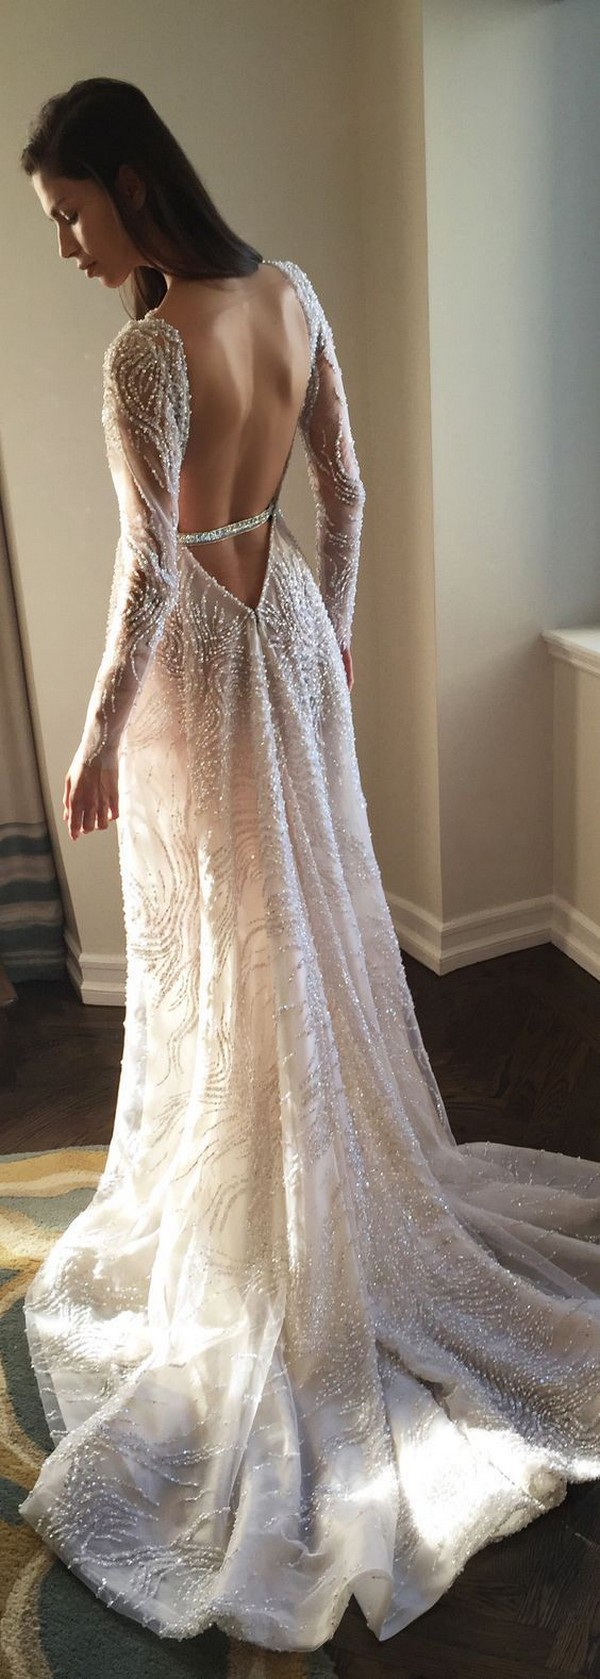 Idan Cohen beaded wedding dress with long sleeves